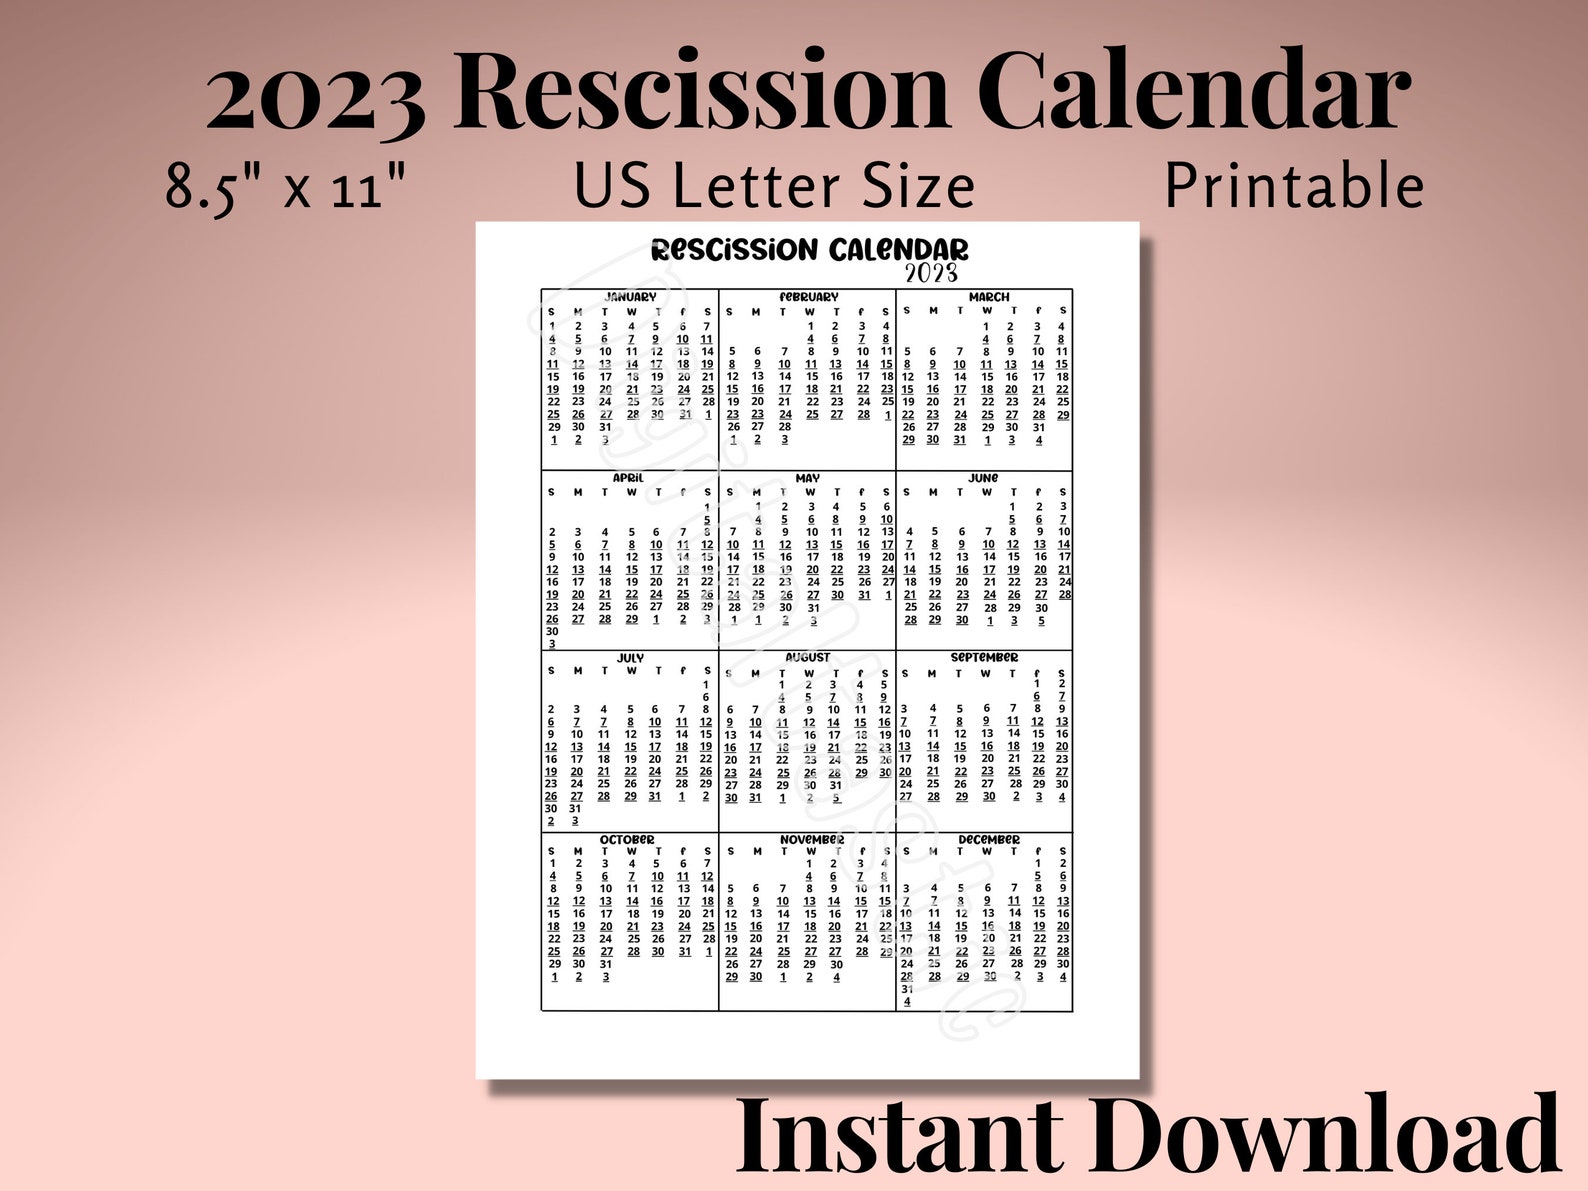 2023 Rescission Calendar Customize and Print